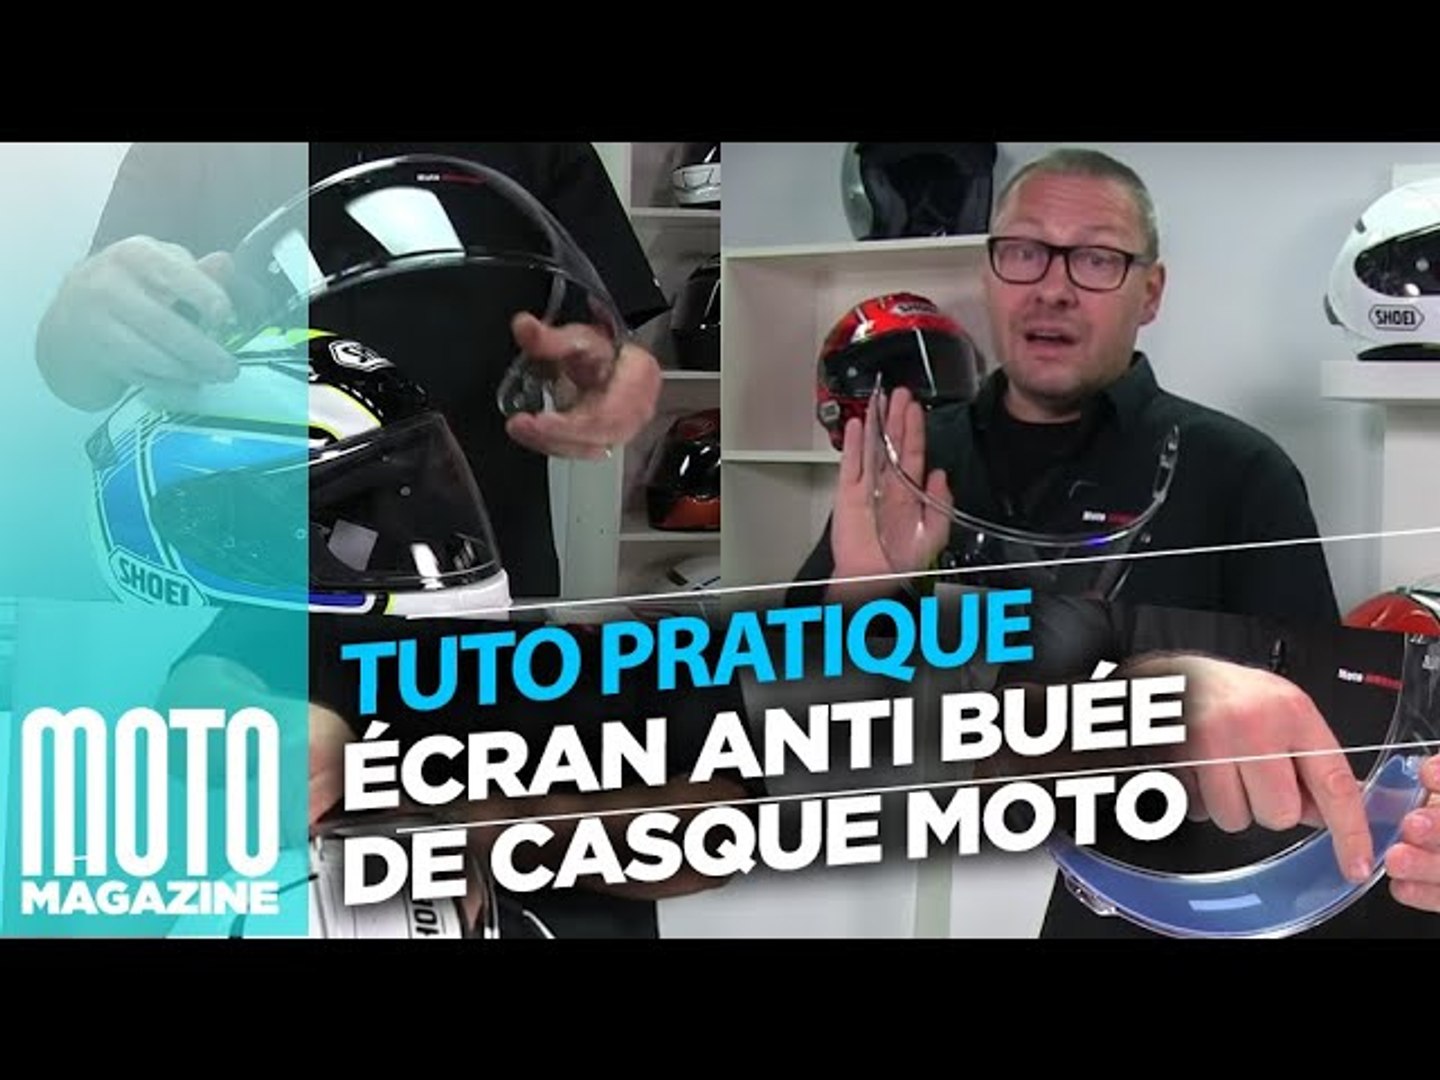 Tuto pratique moto - Ecran antibuée pour casque moto - Vidéo